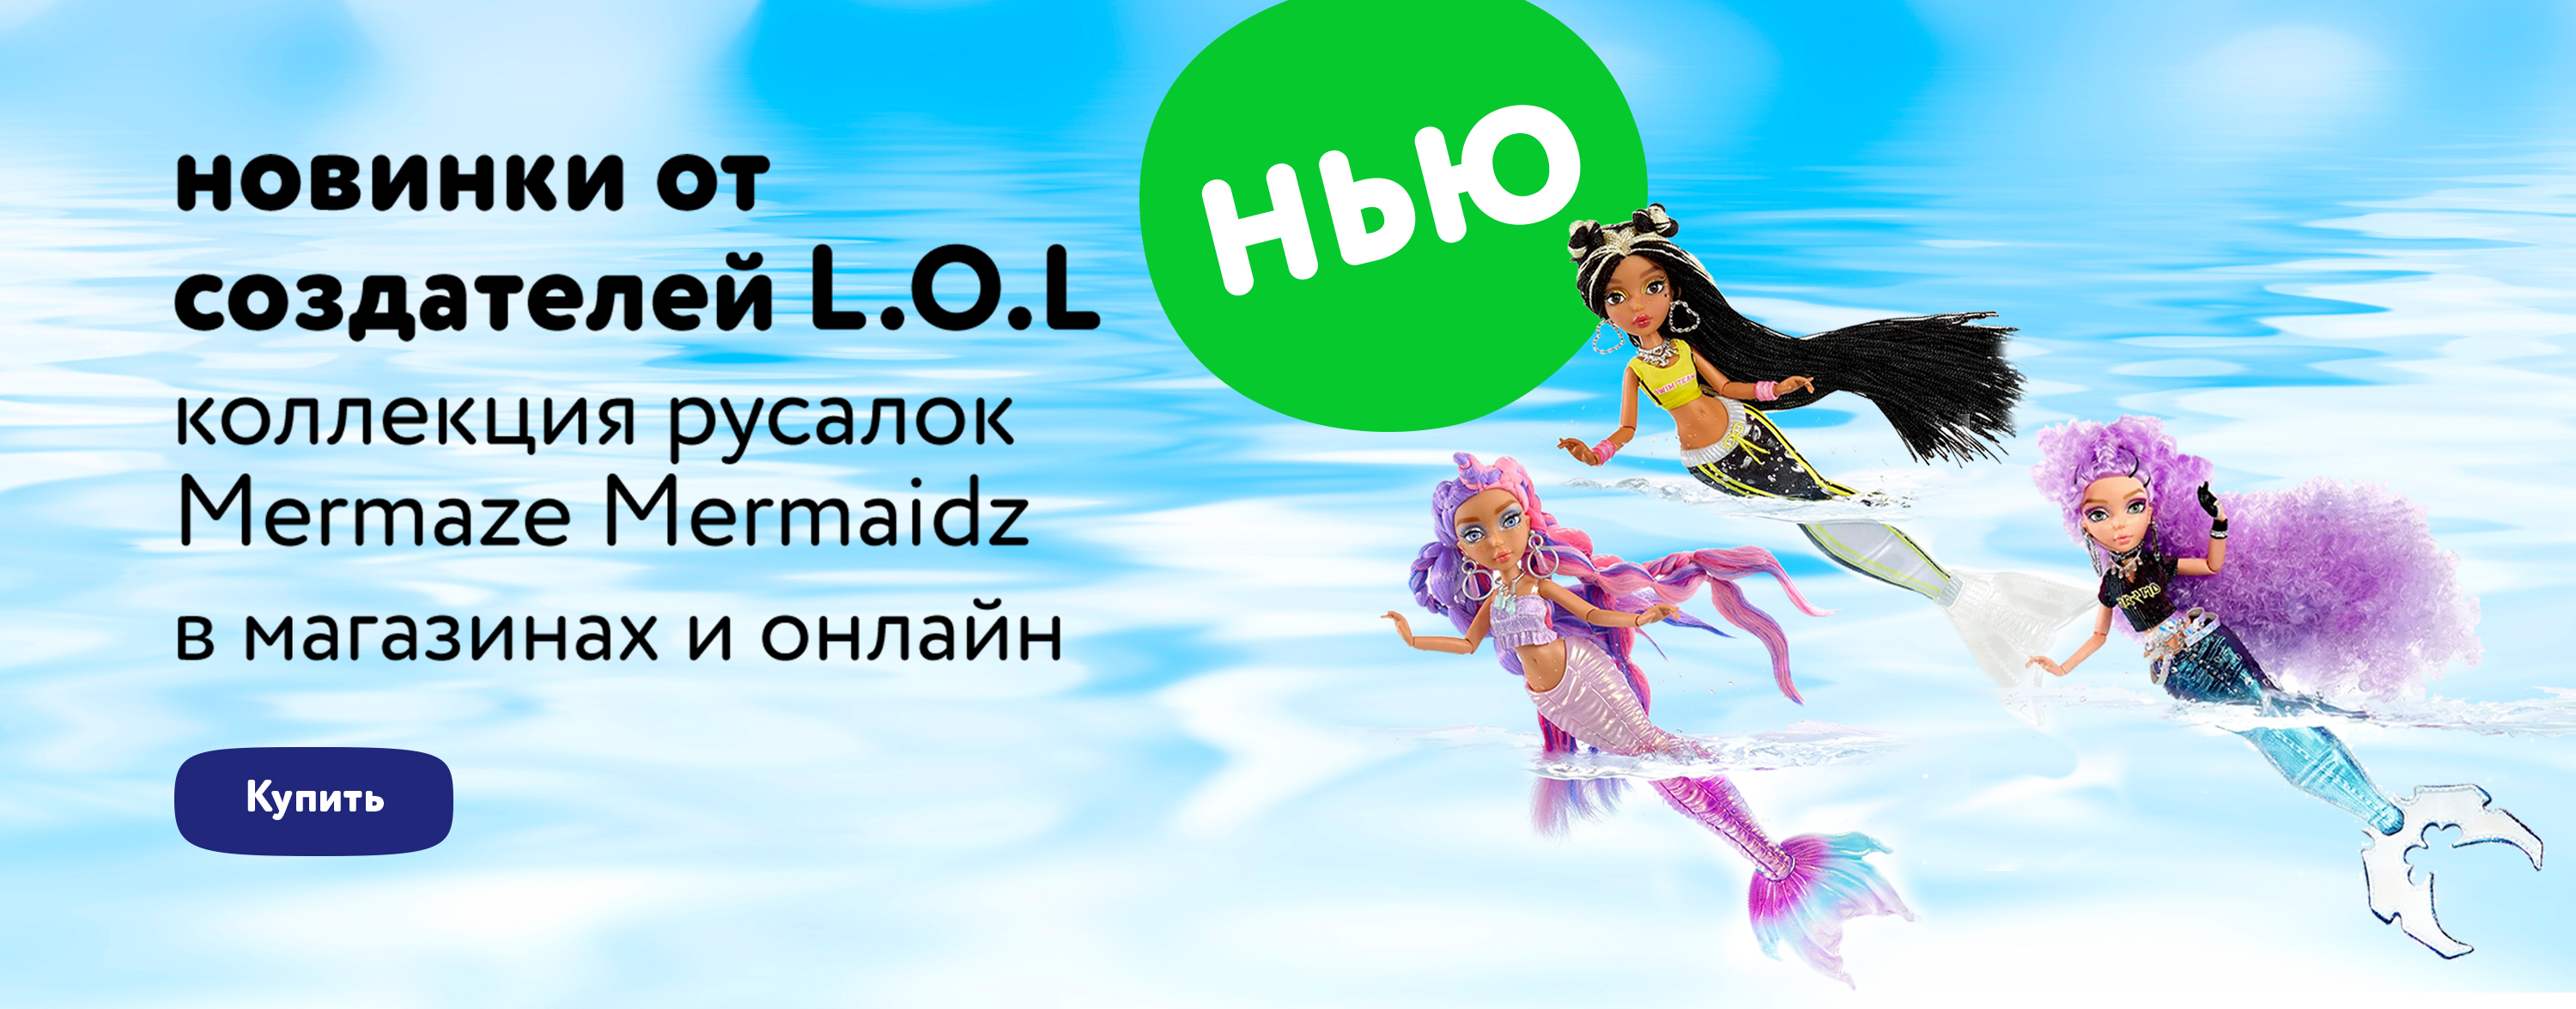 Новинки от создателей L.O.L. — русалки Mermaze Mermaidz карусель+категории